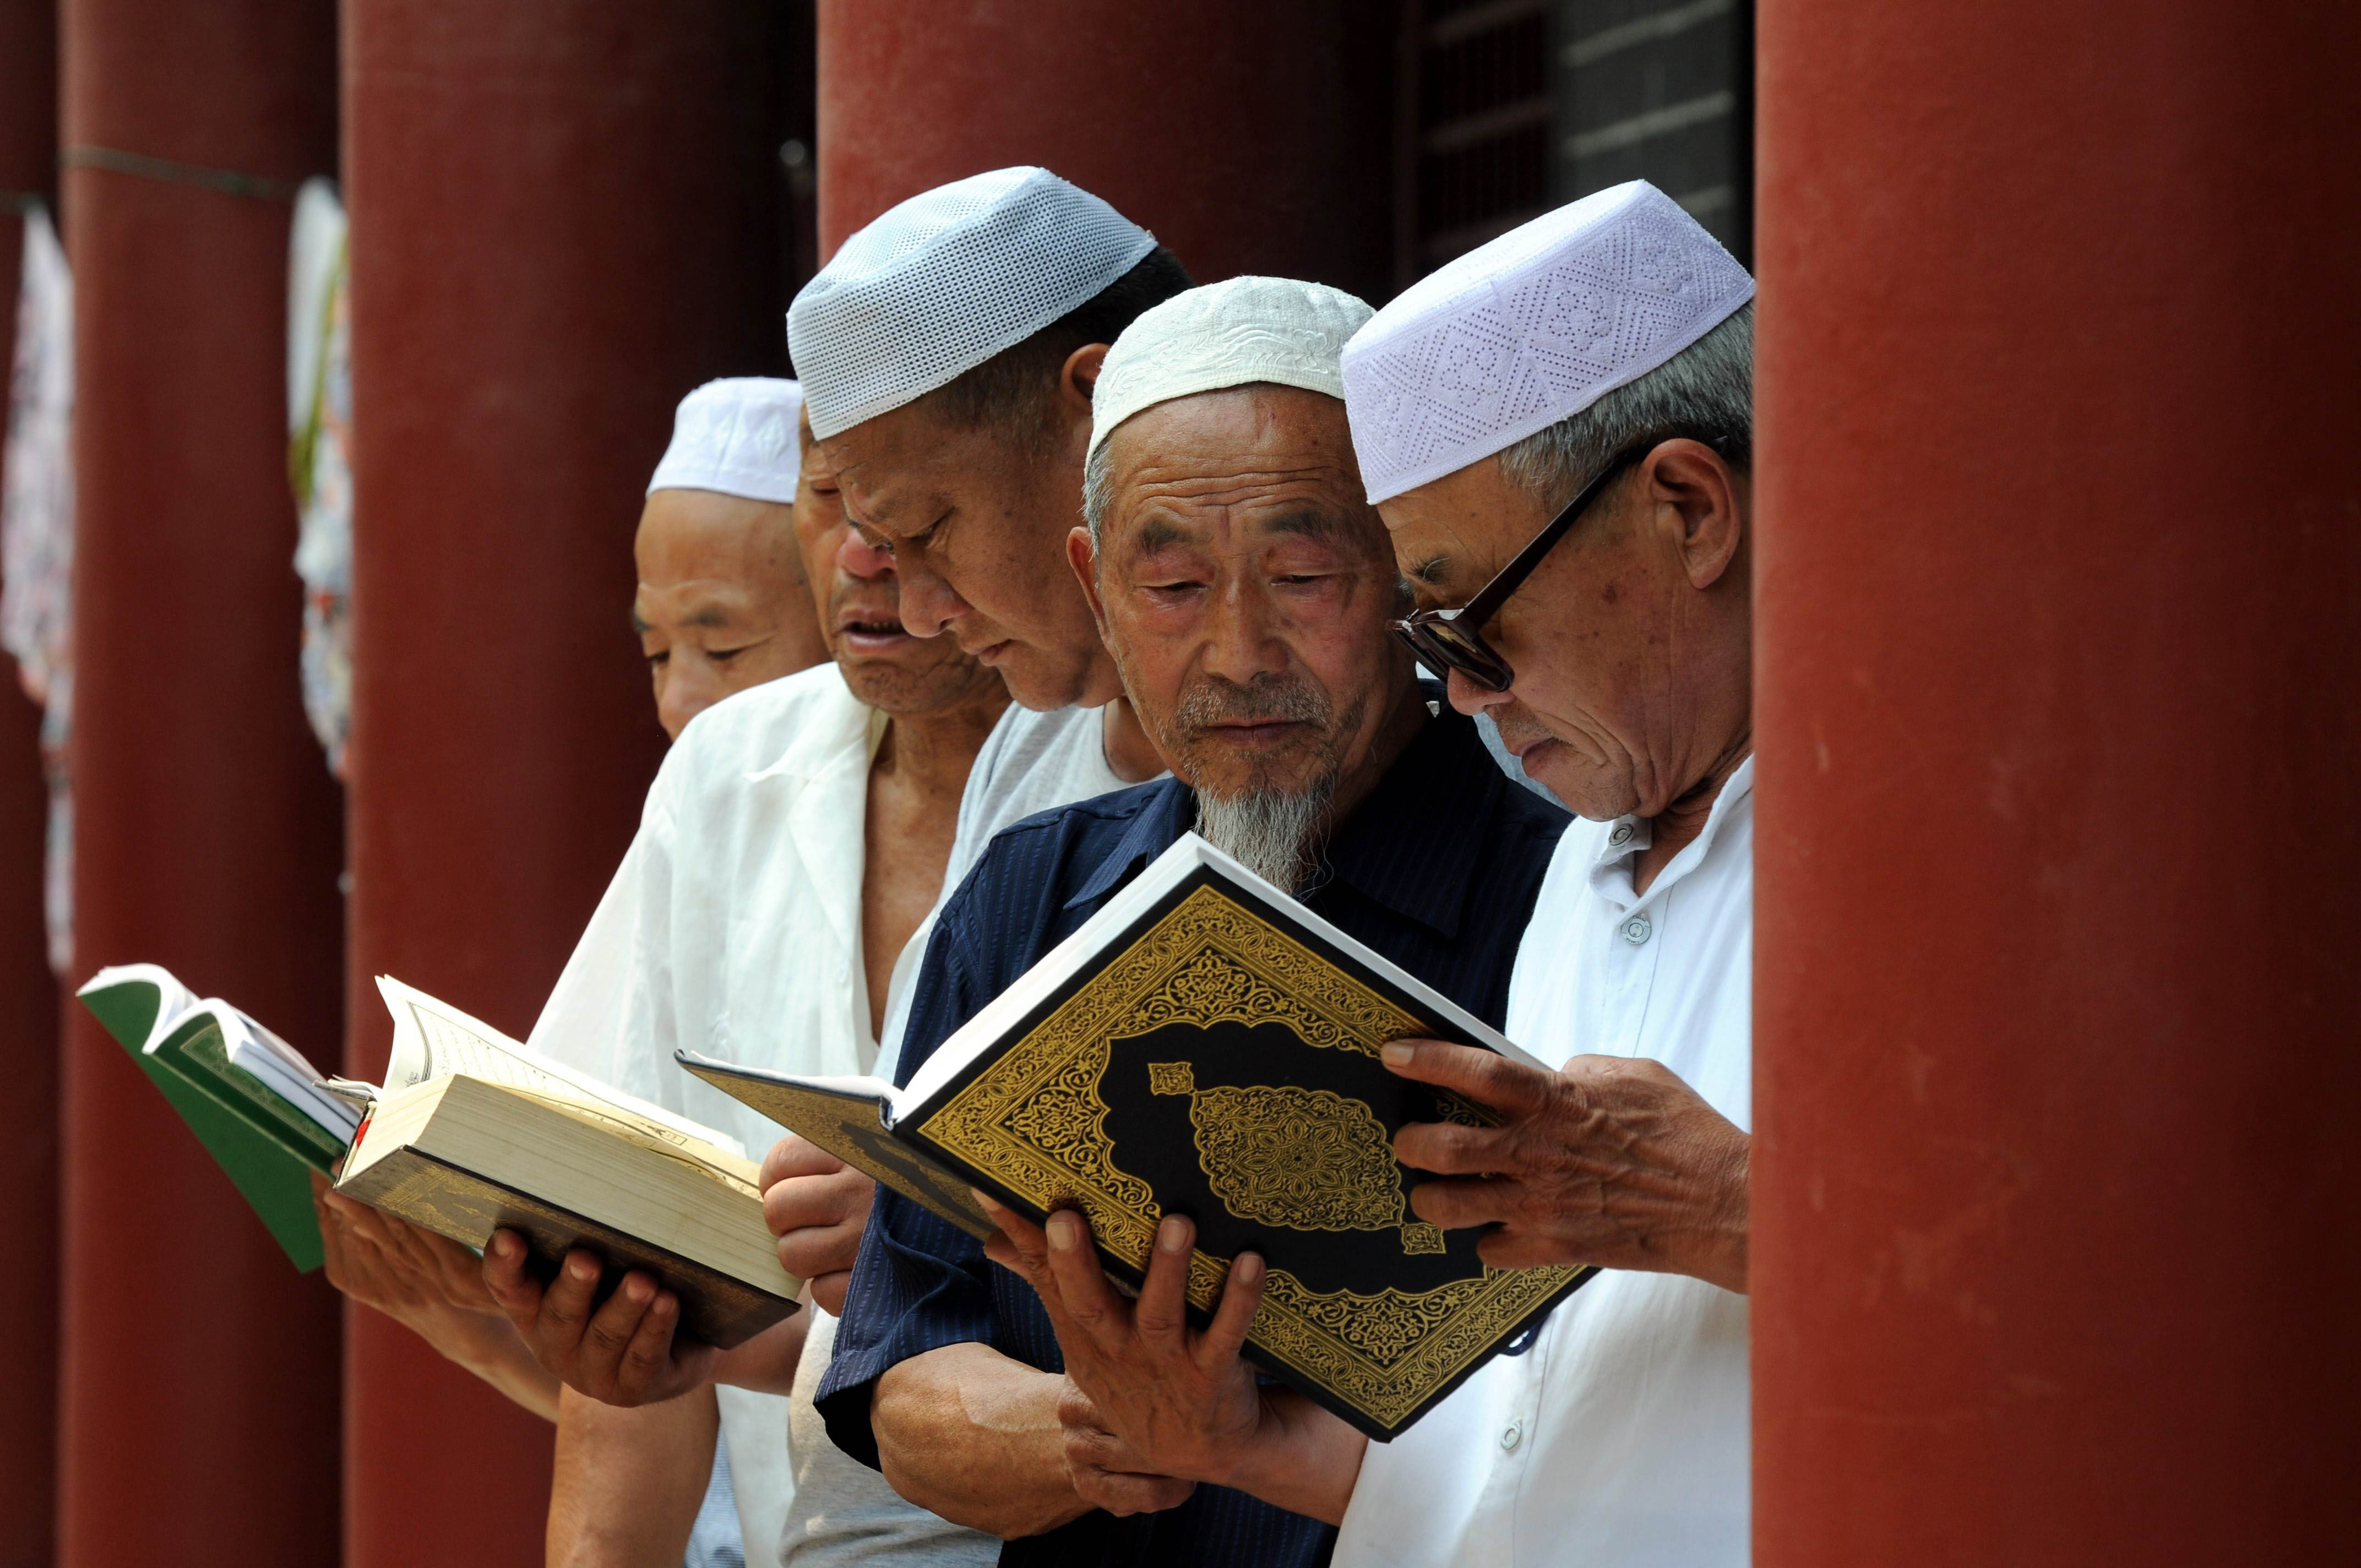 Мусульманских чтение. Фото мусульман.